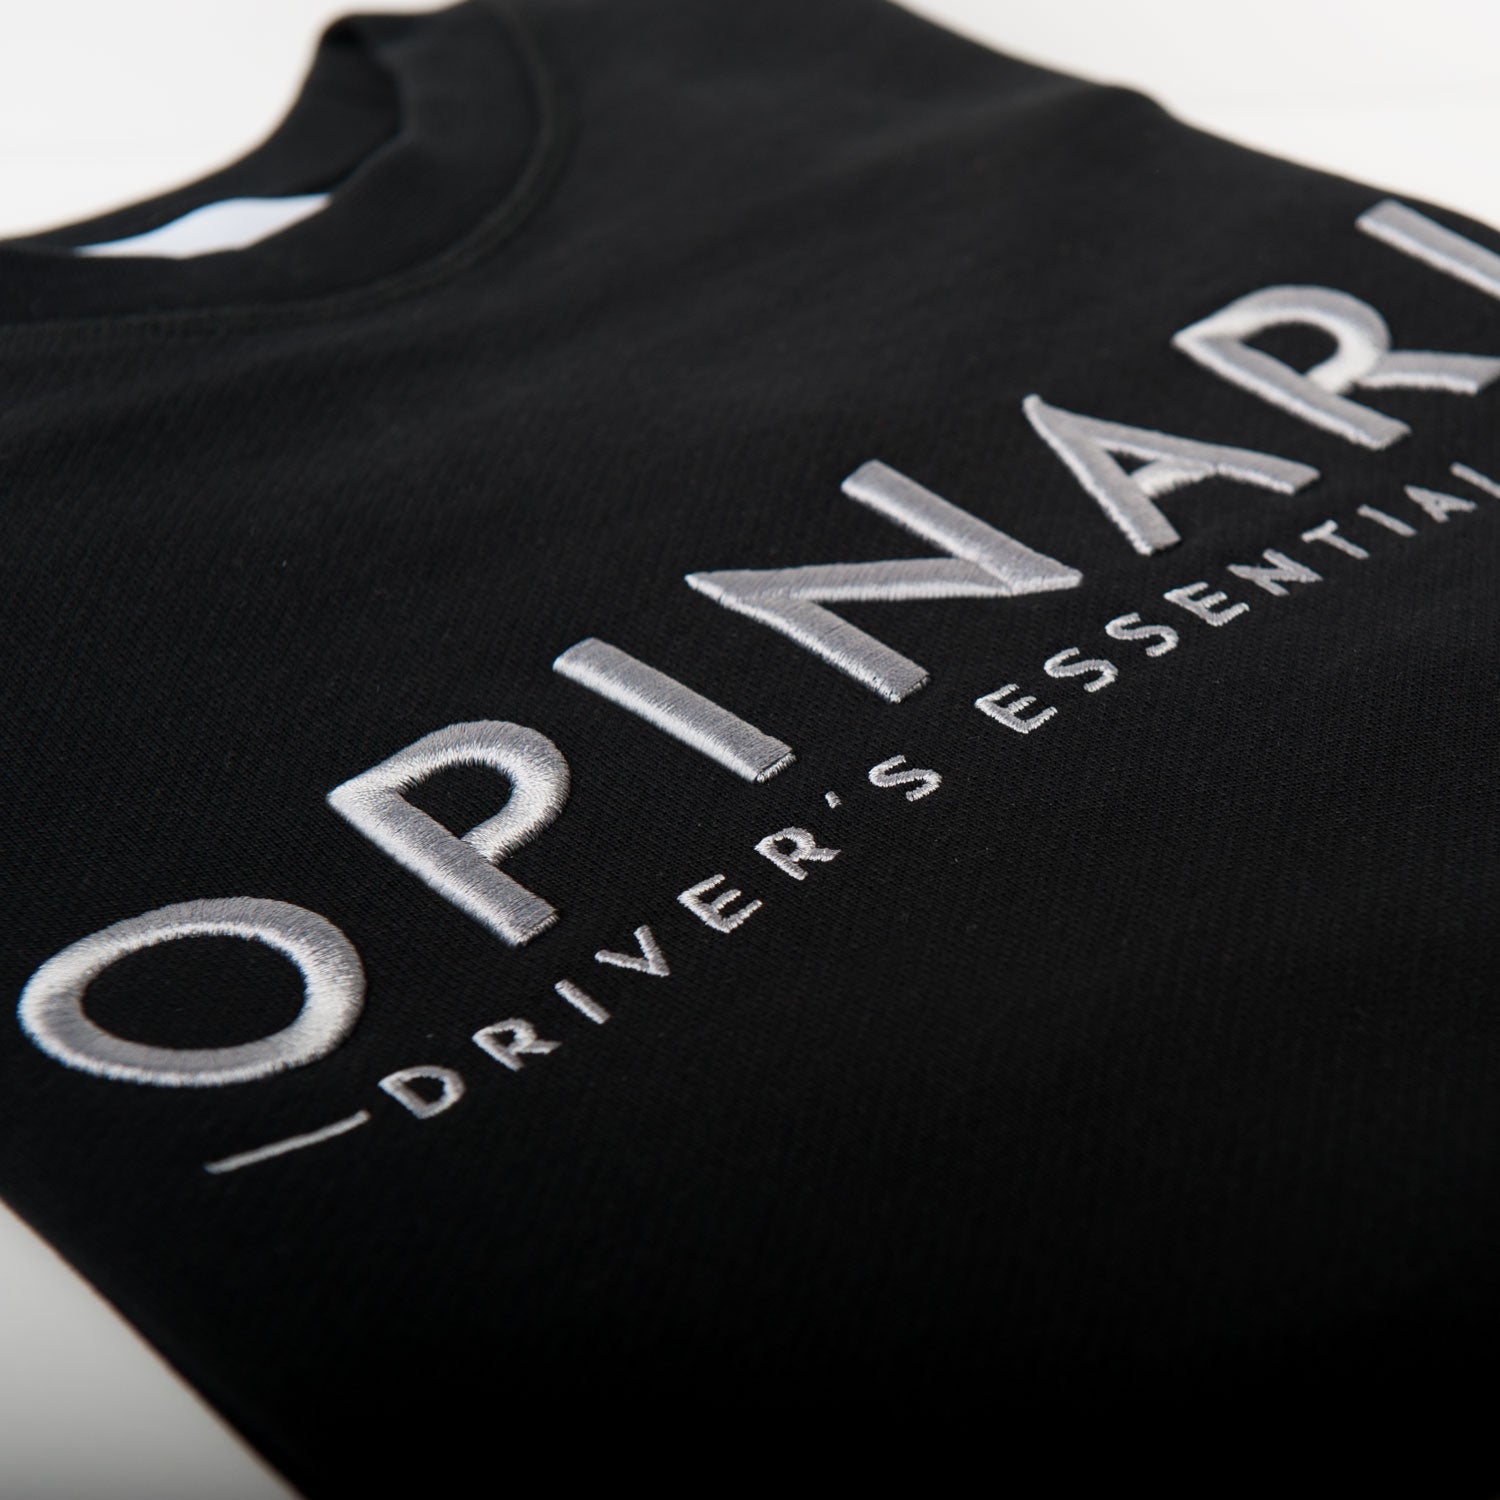 Classic sweat grey on black - Opinari - Driver's Essentials